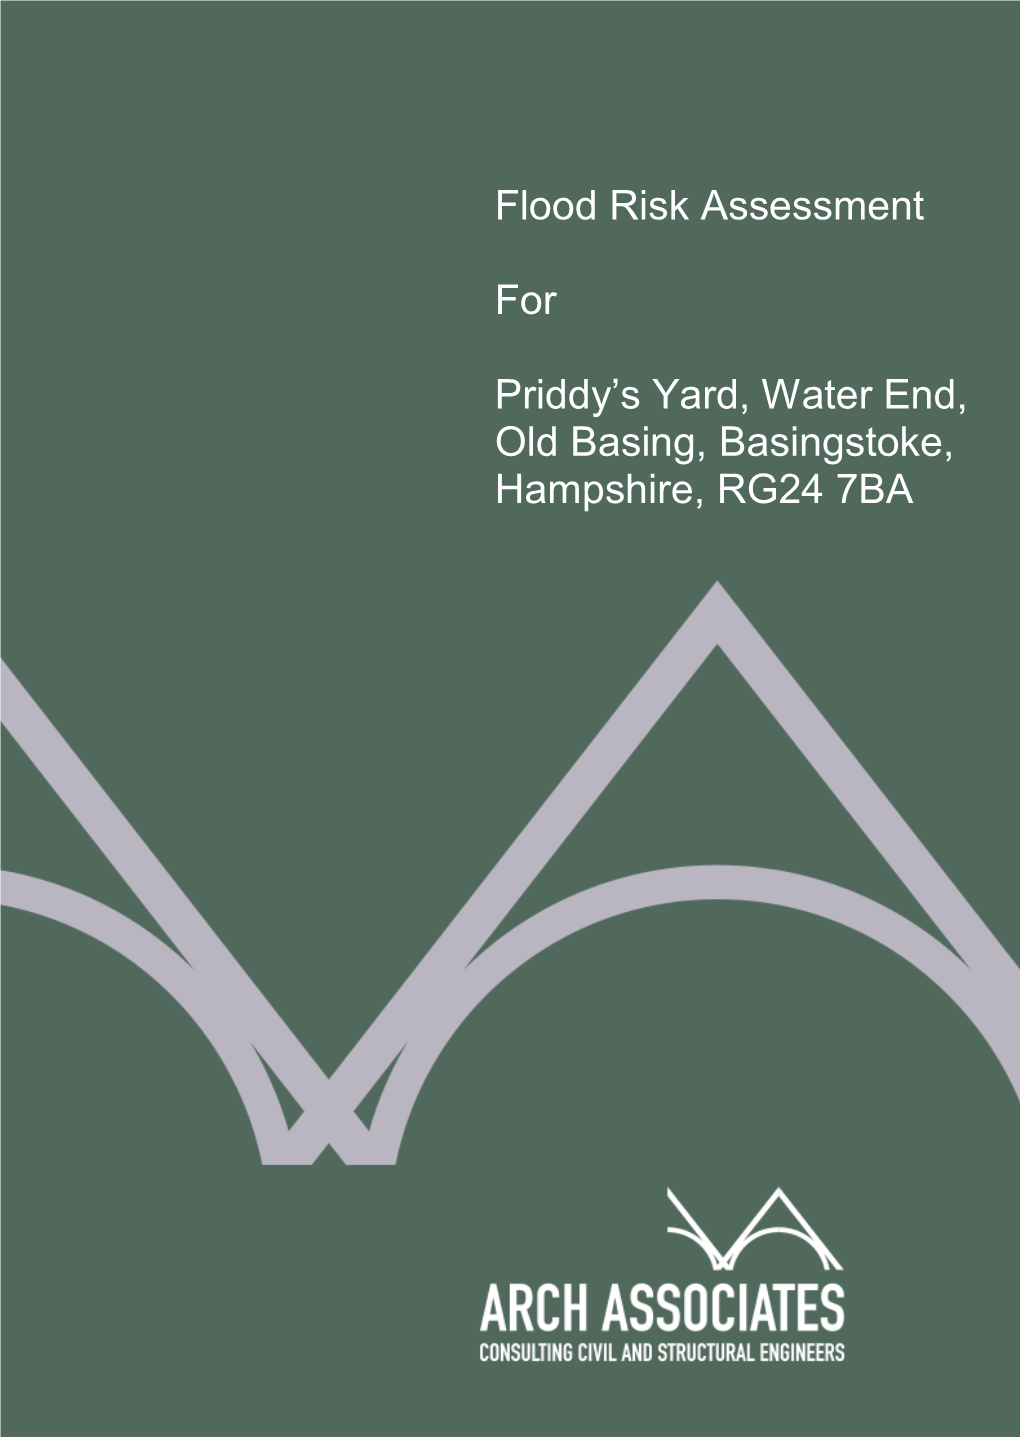 Flood Risk Assessment for Priddy's Yard, Water End, Old Basing, Basingstoke, Hampshire, RG24